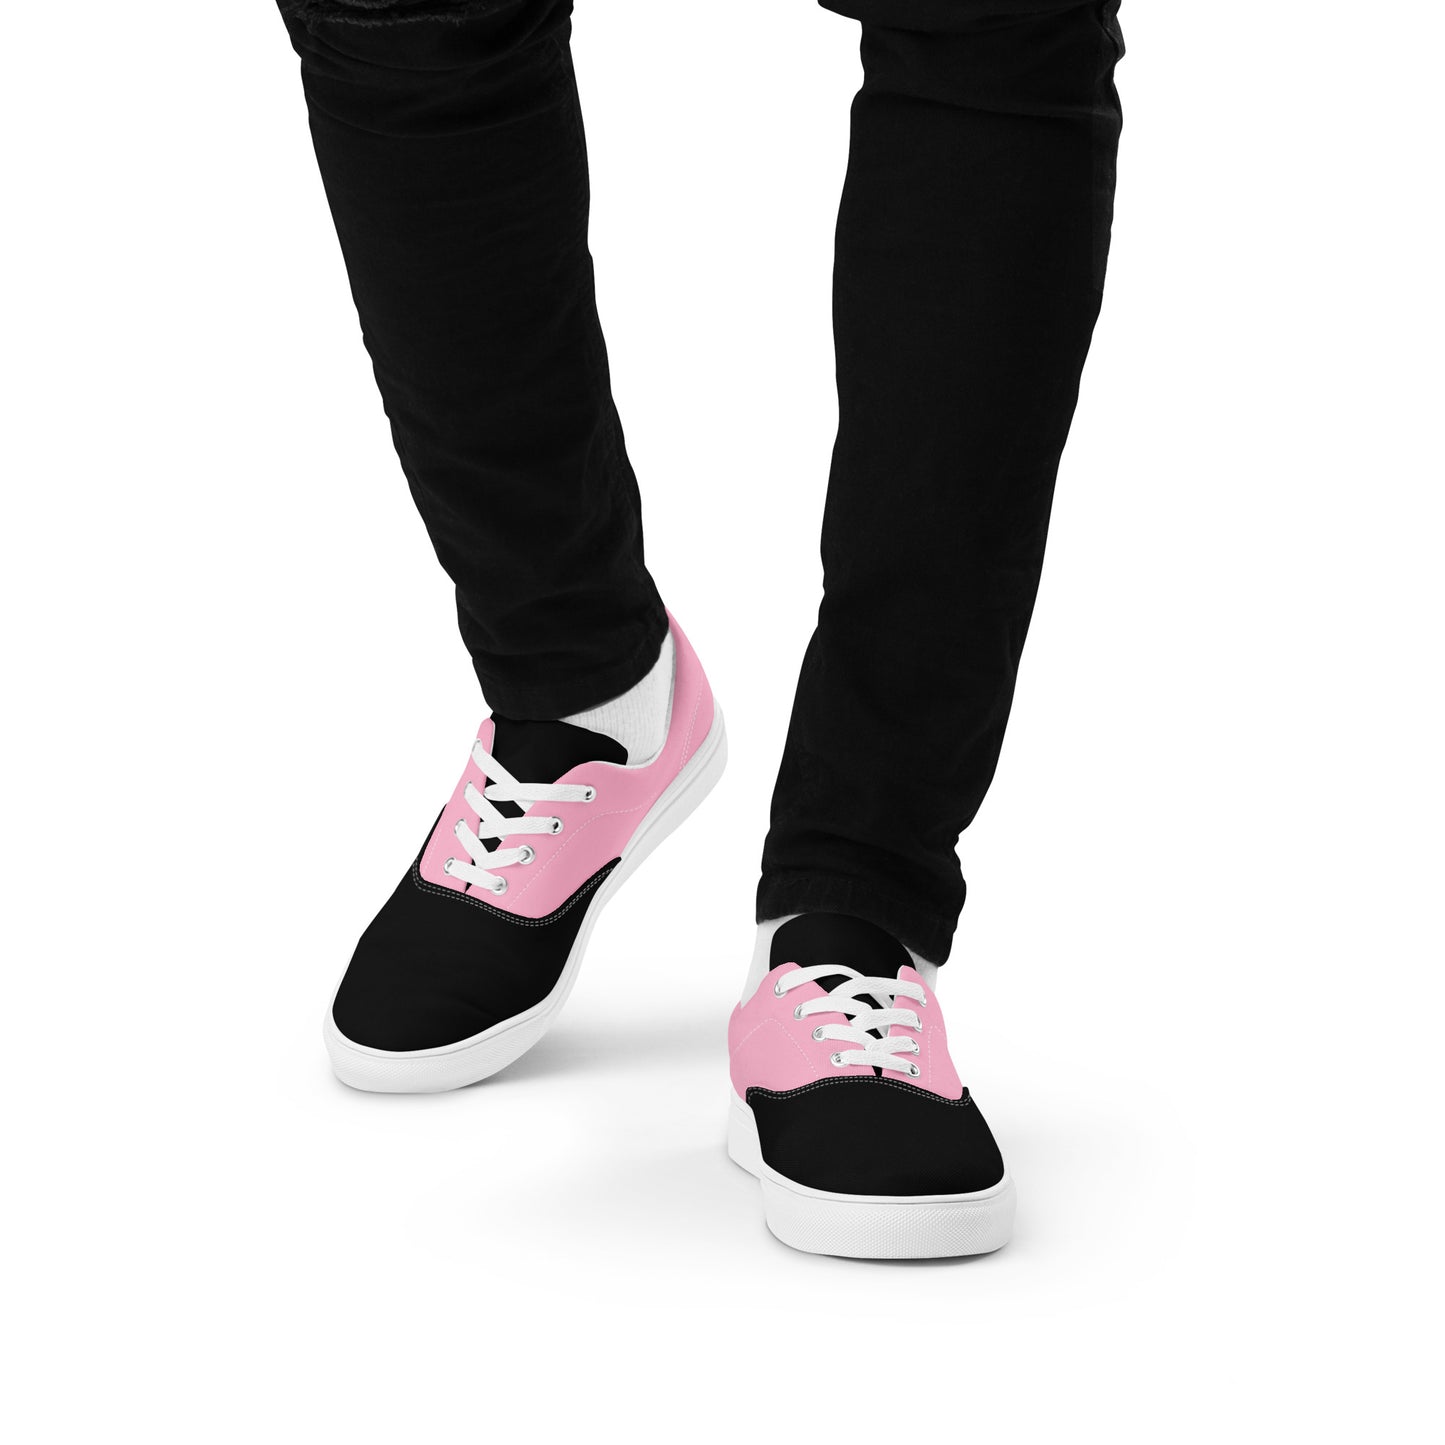 Black on Pink 954 Signature Men’s lace-up canvas shoes